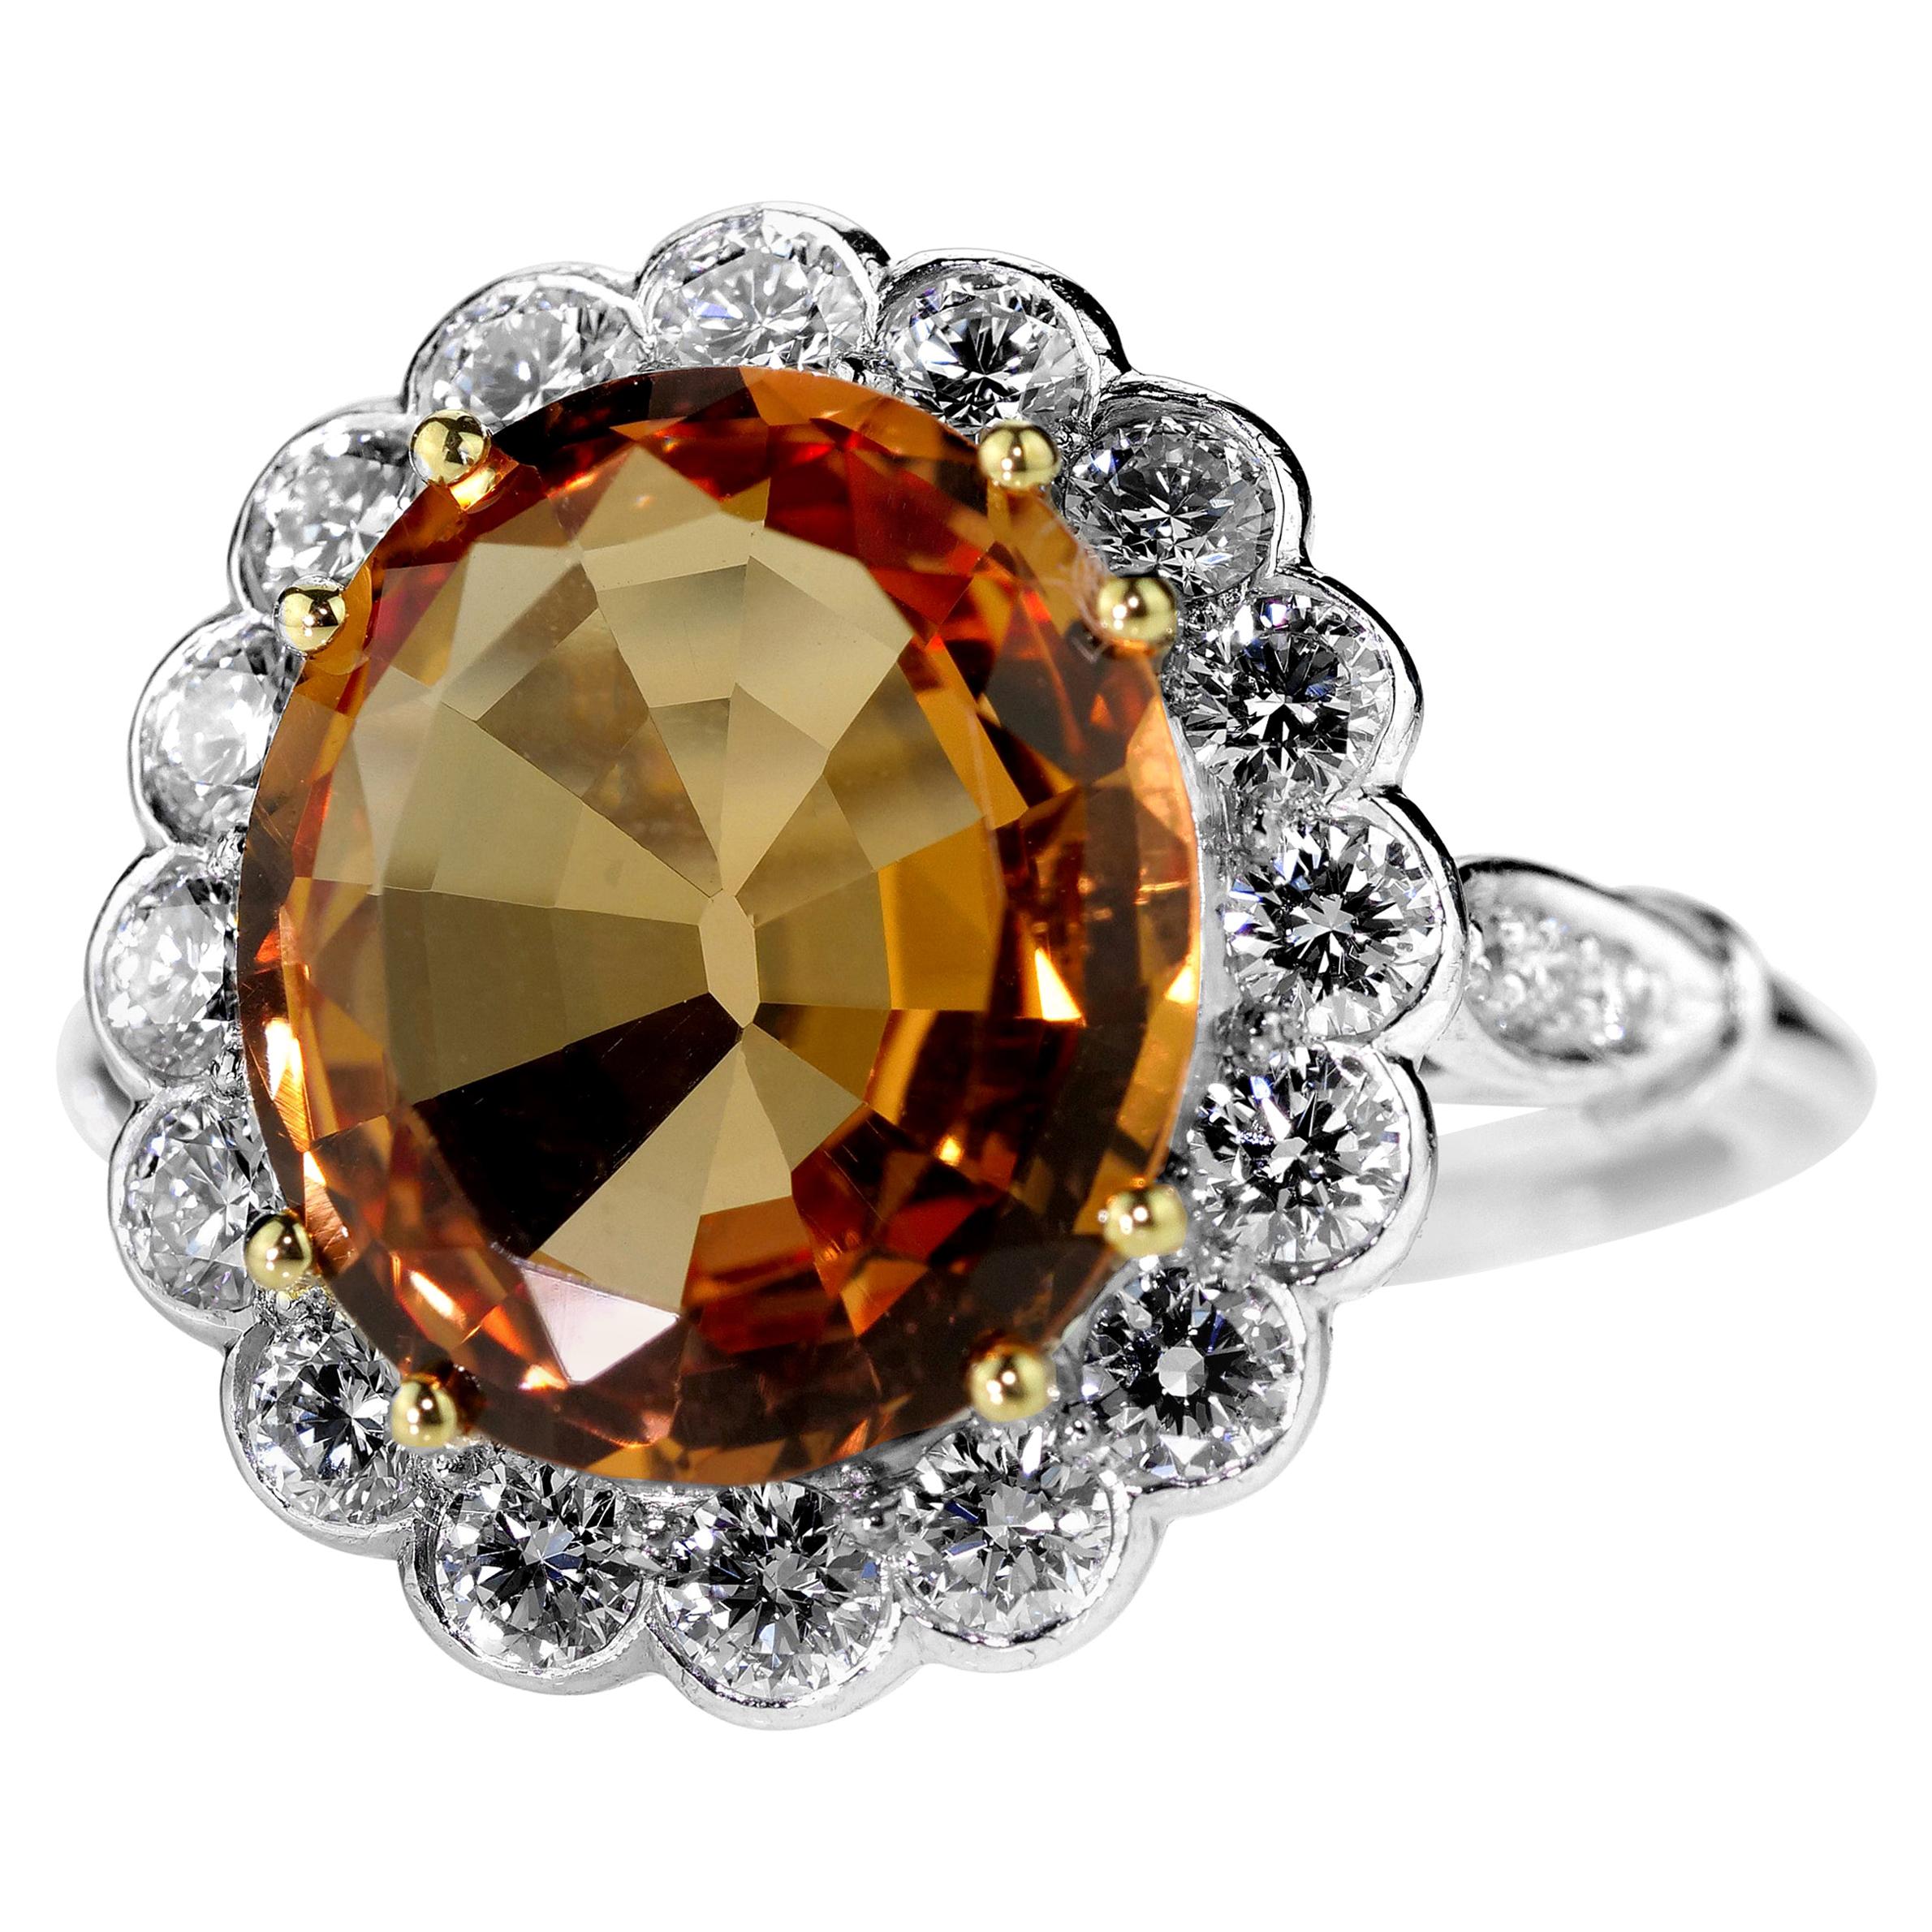 Brazilian Imperial Topaz Orange Color 4.8ct and Diamond Cluster Ring in Platinum